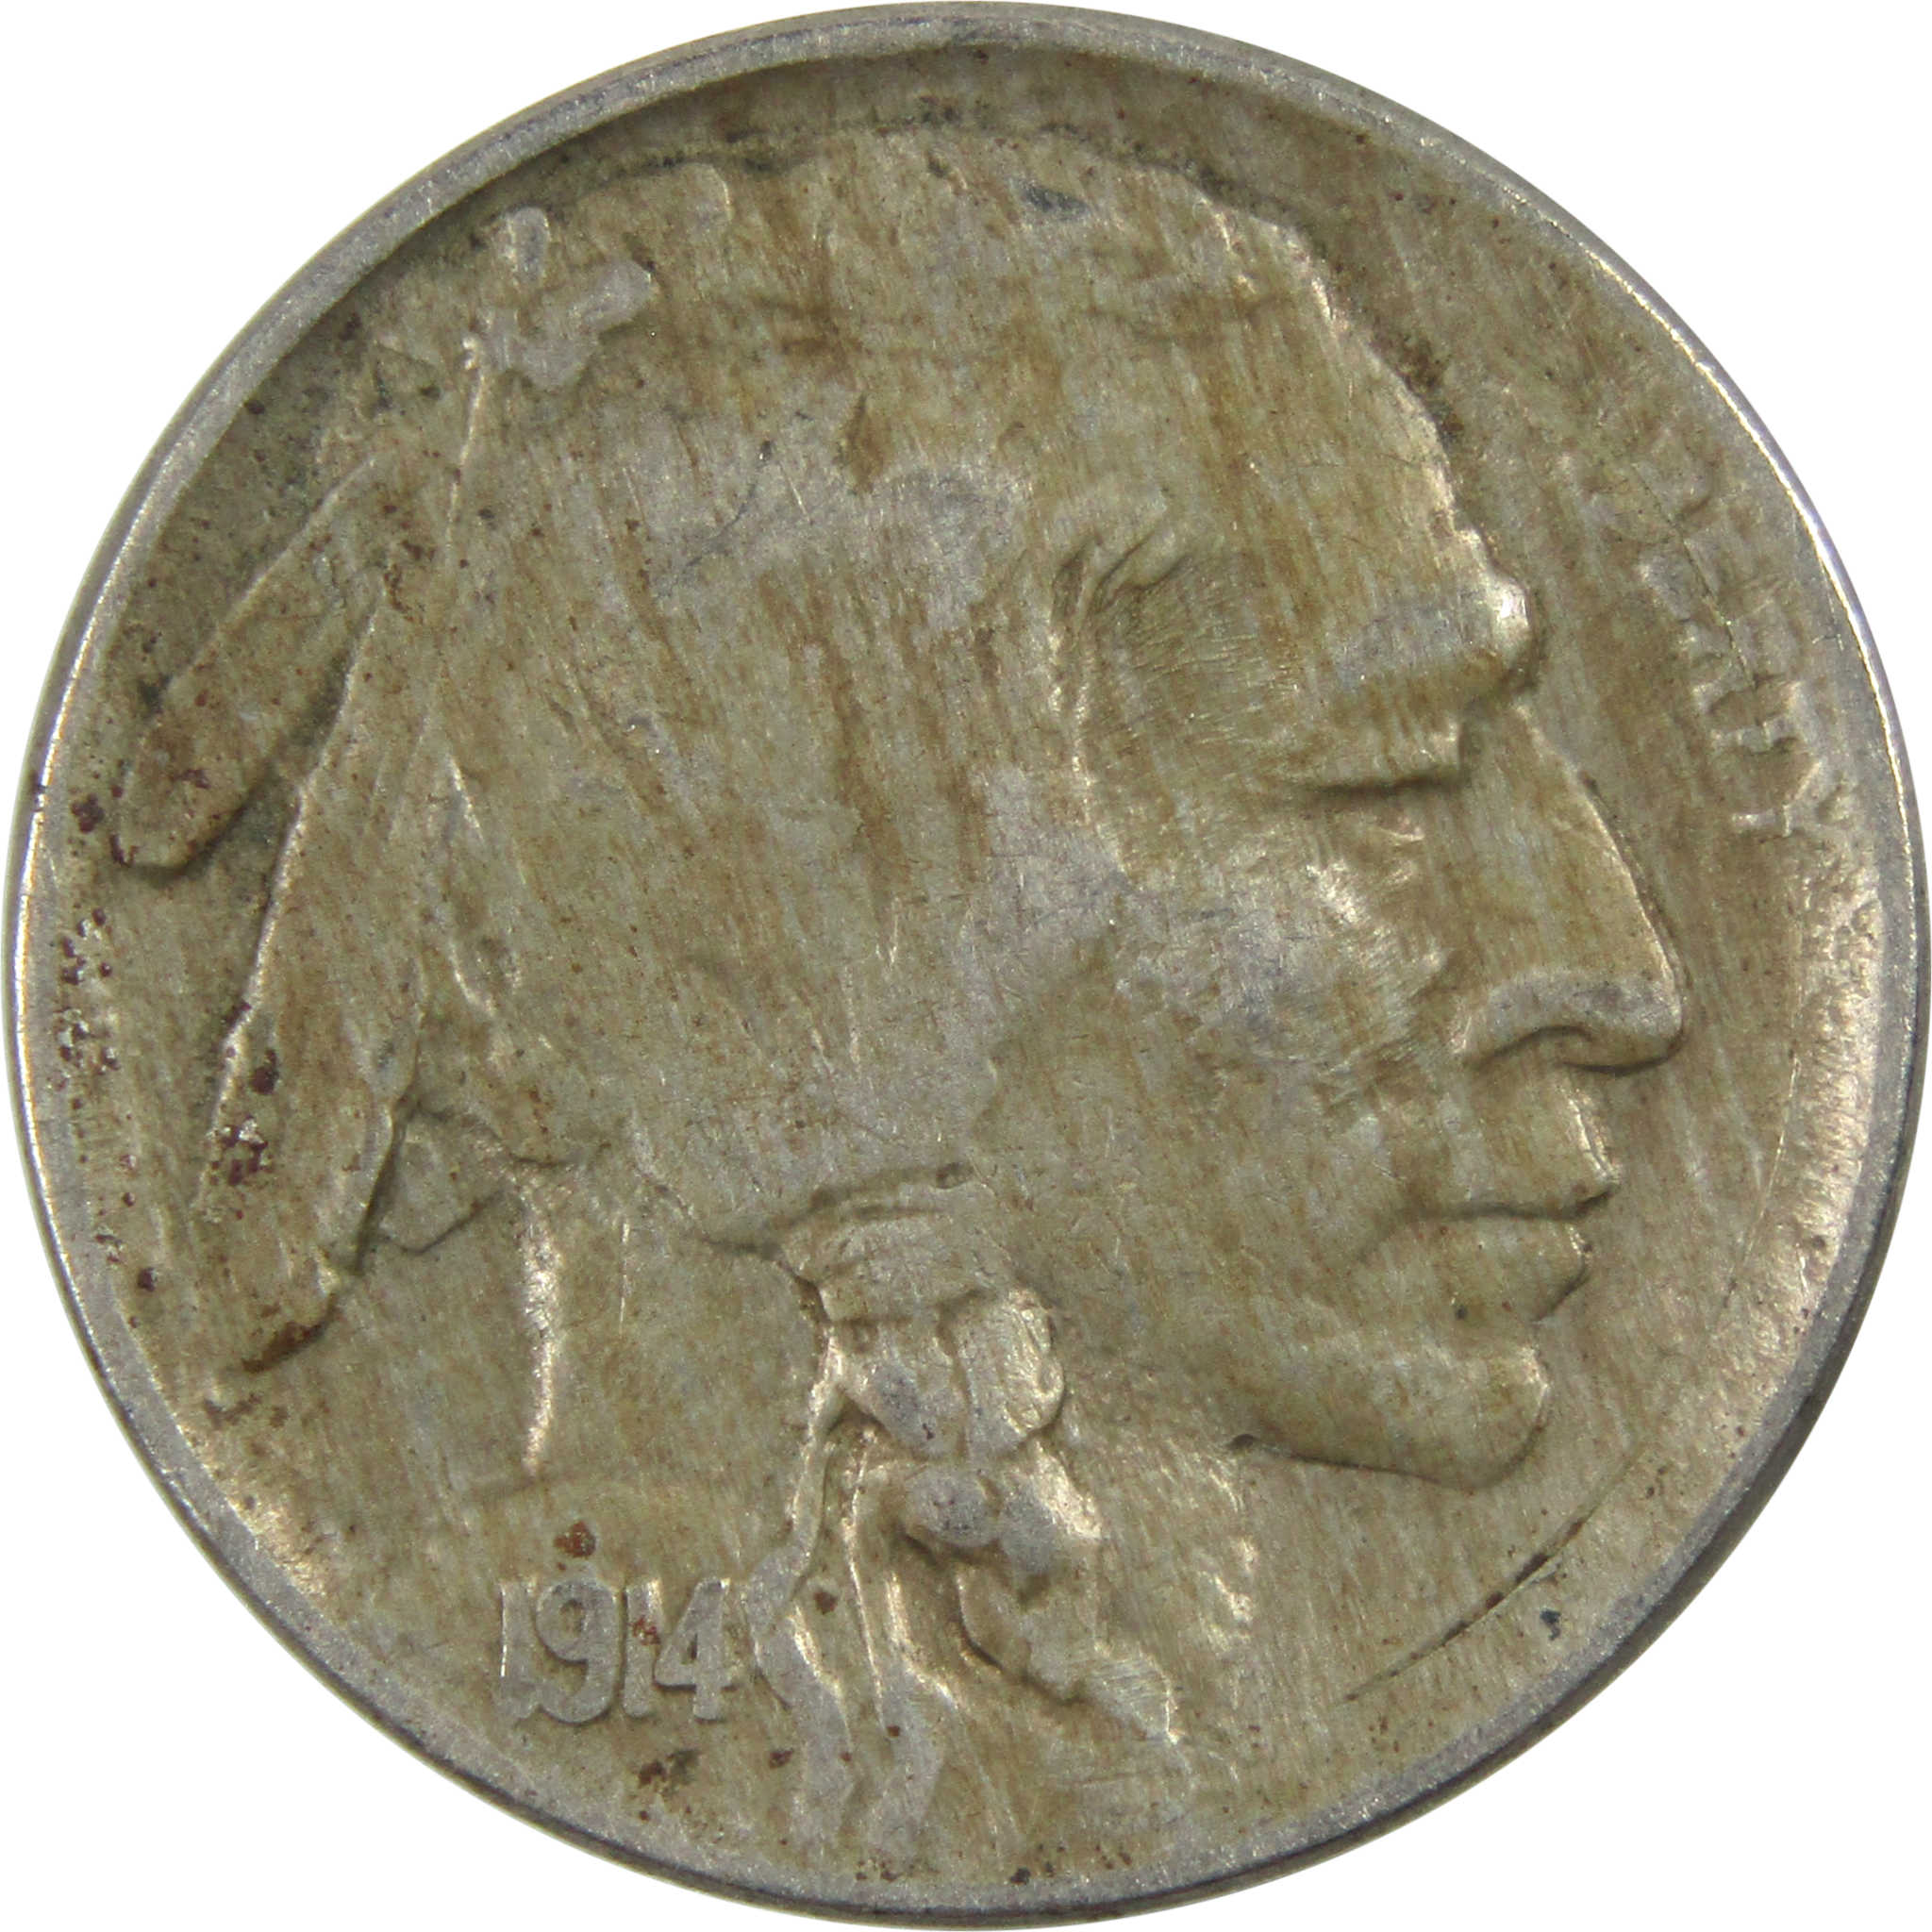 1914 Indian Head Buffalo Nickel VF Very Fine 5c Coin SKU:I13010